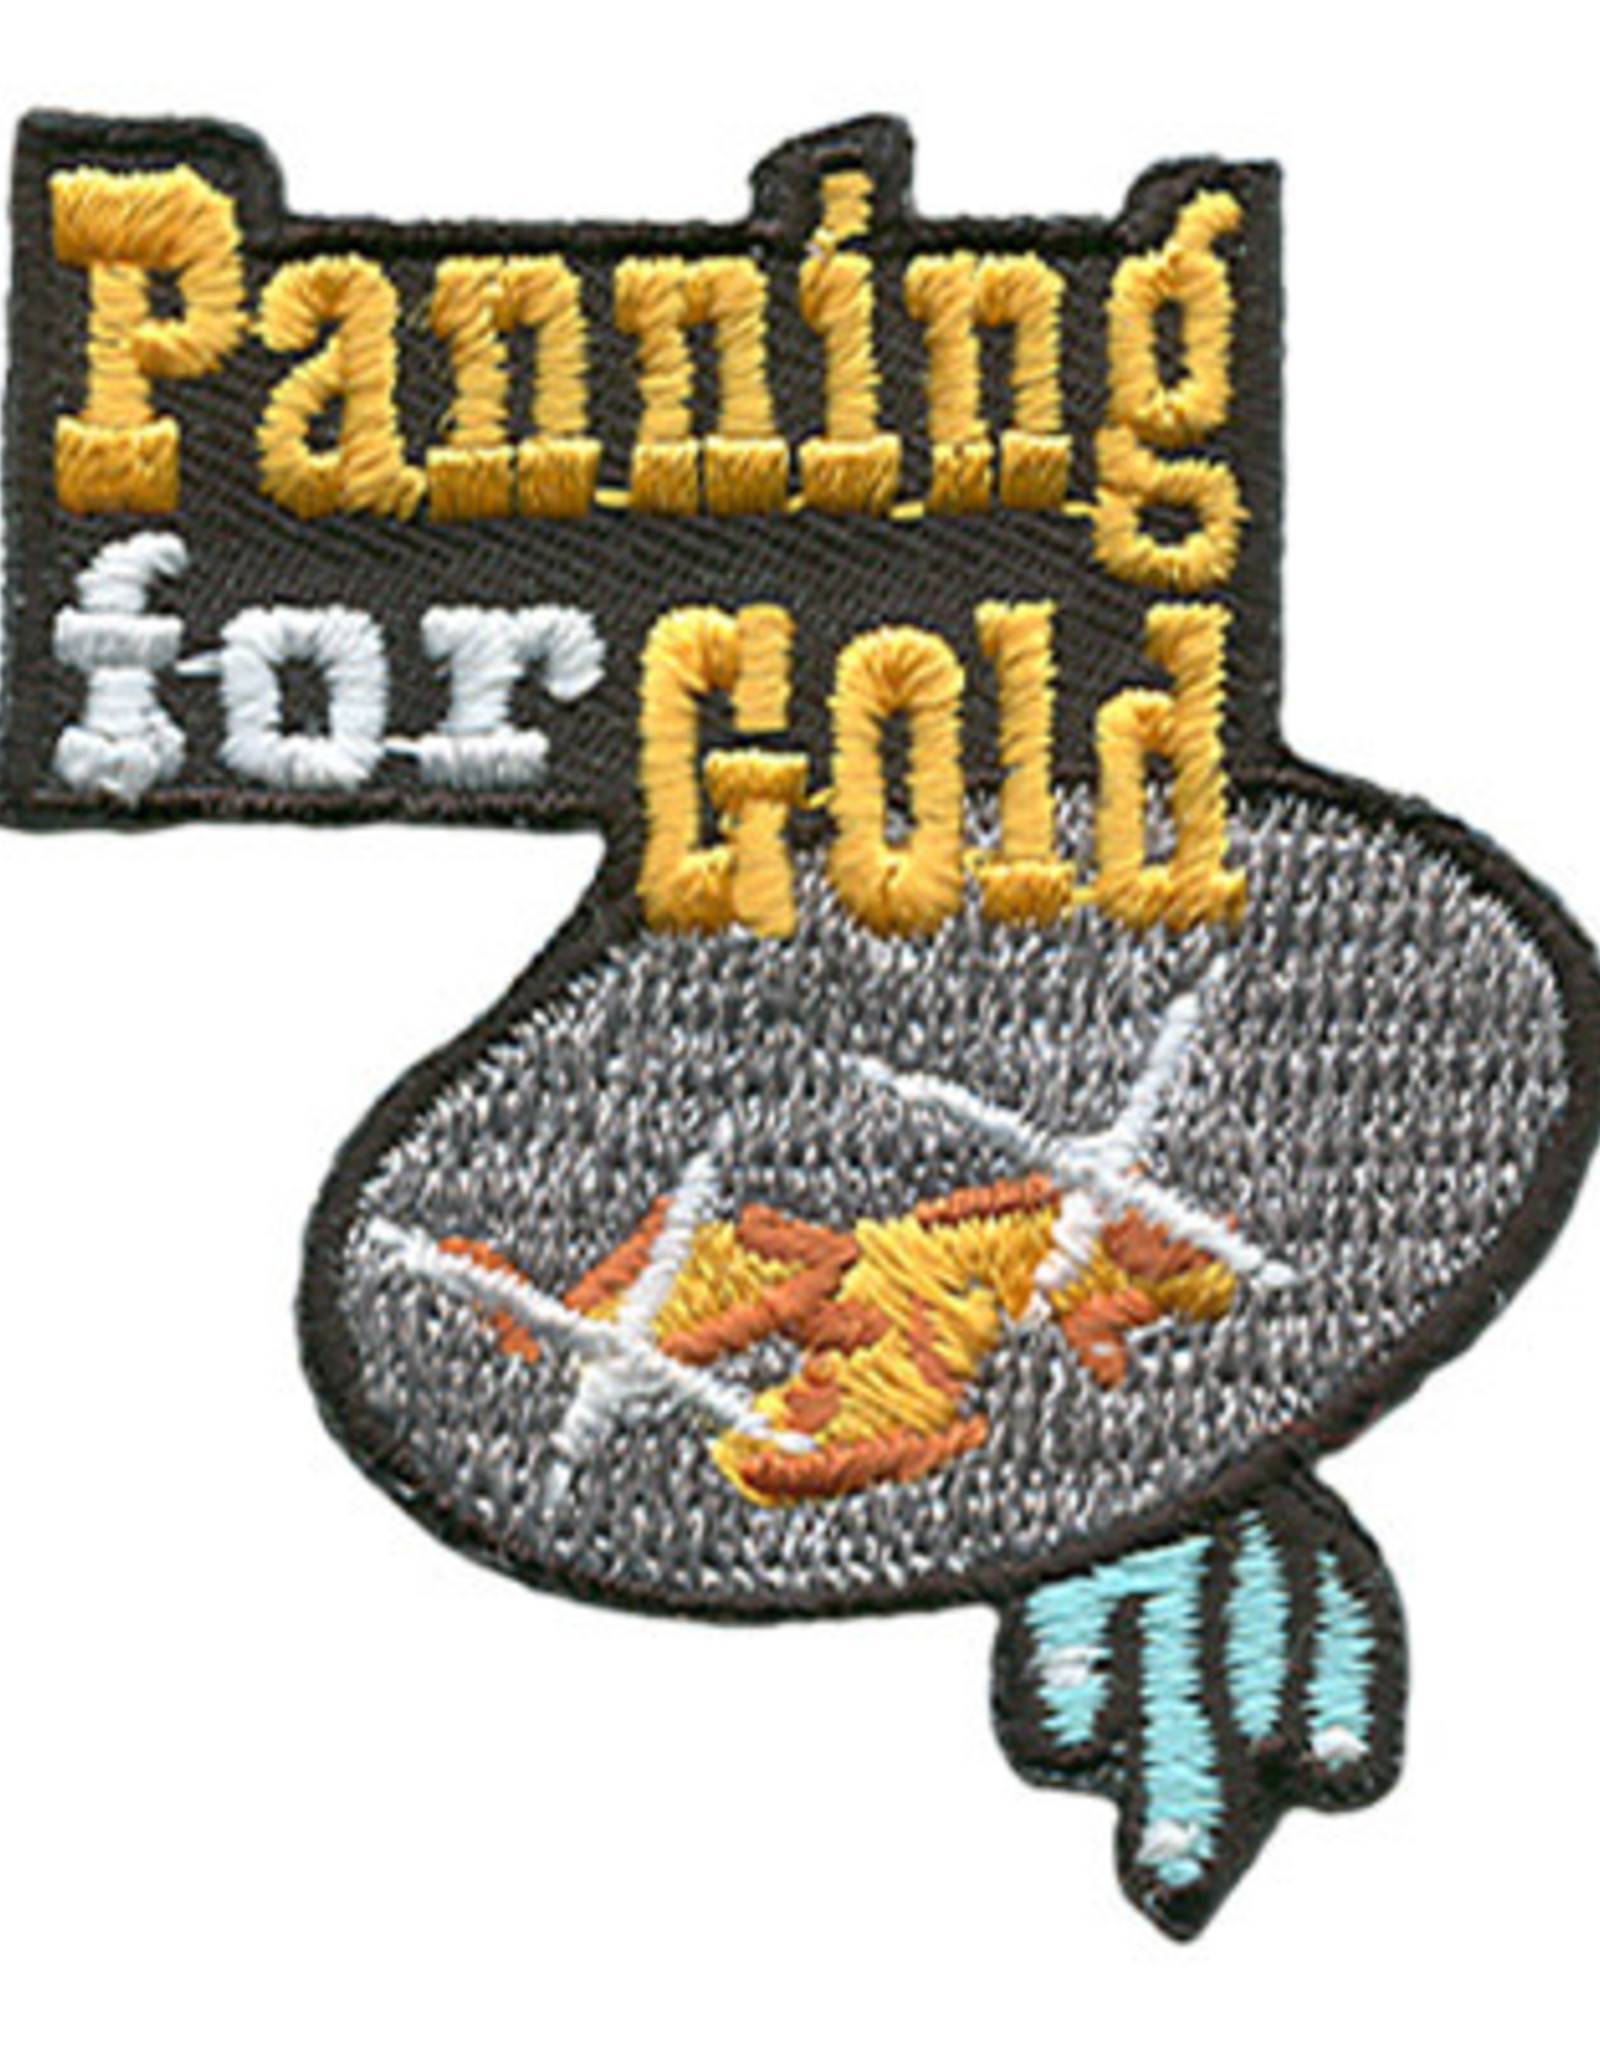 Advantage Emblem & Screen Prnt Panning for Gold Fun Patch